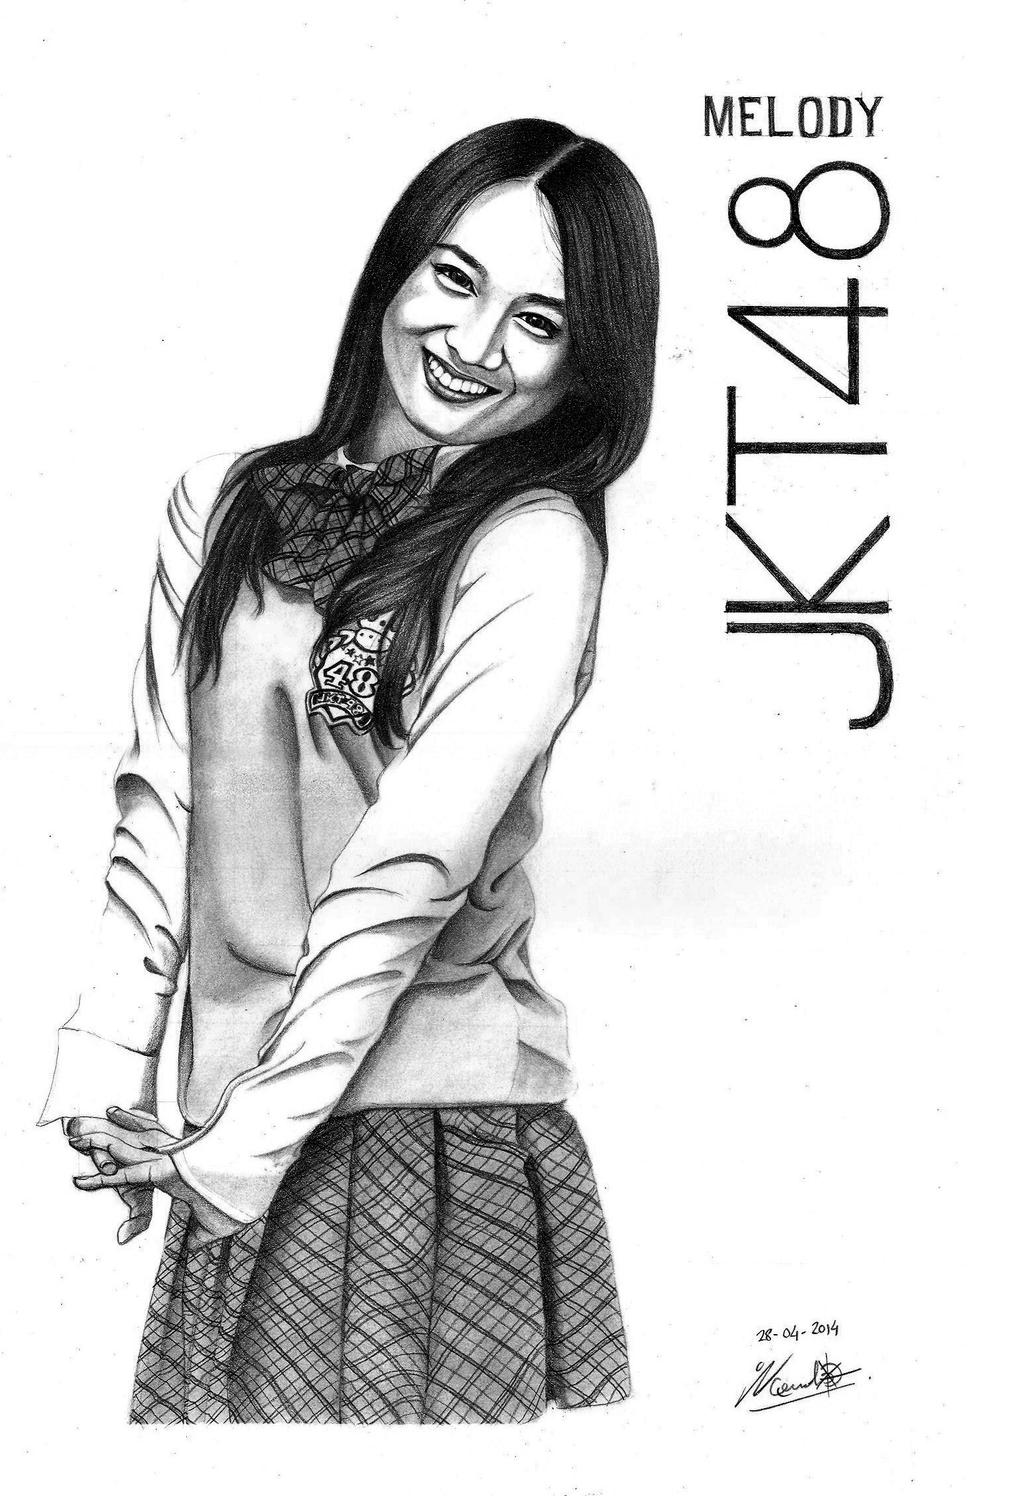 Melody Nurramdhani Laksani JKT48 By IqbalResmana On DeviantArt